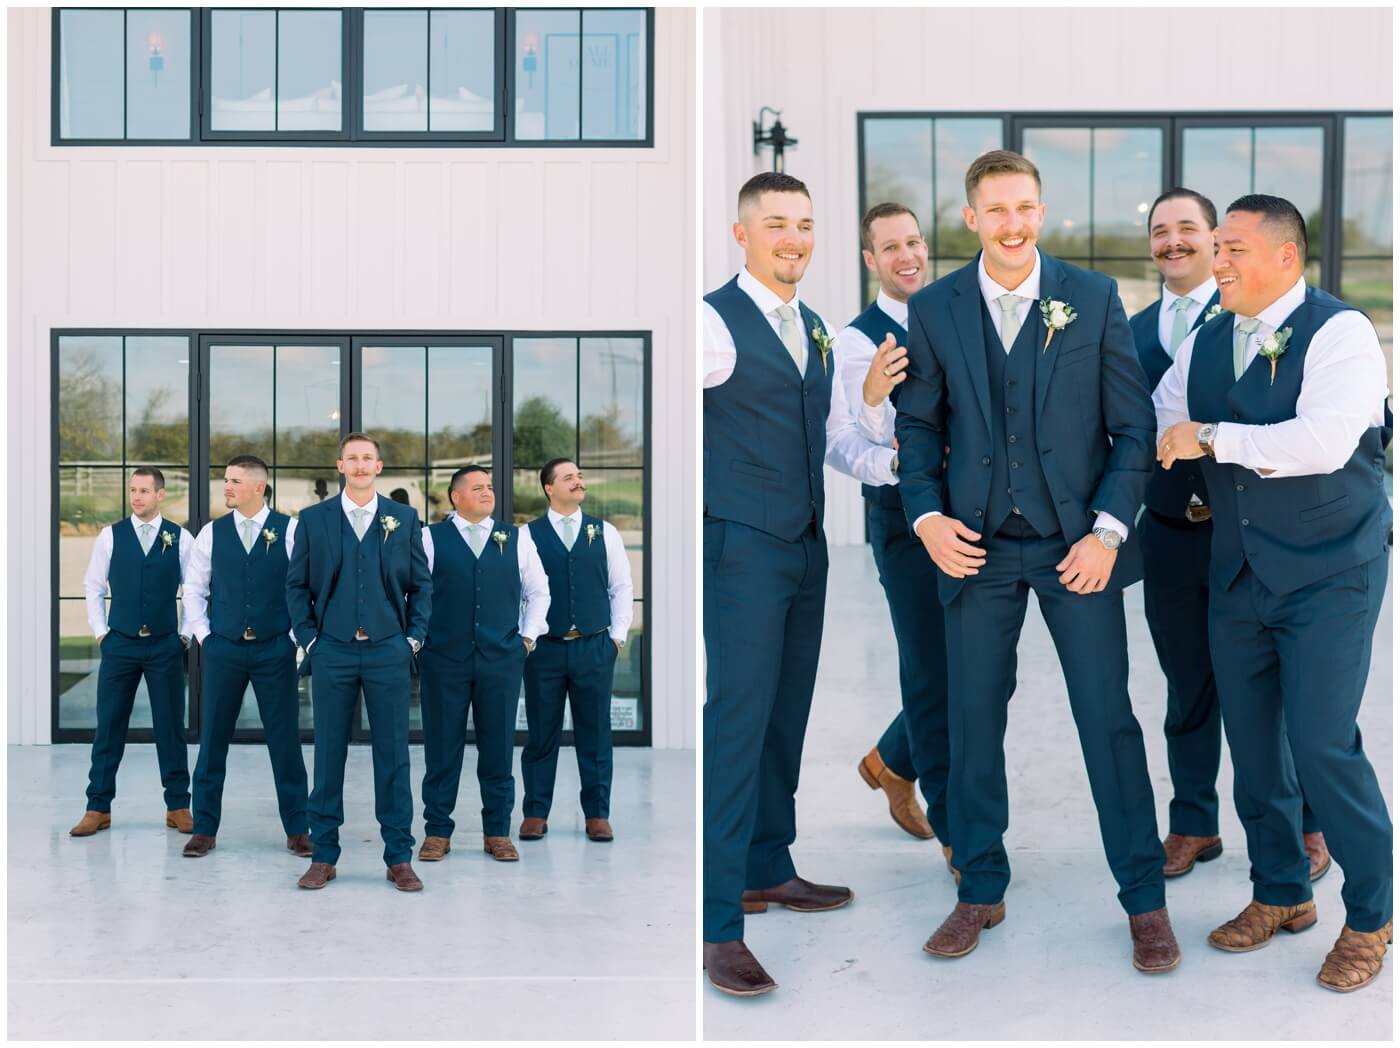 Texas farmhouse wedding | the groom laughs with his groomsmen